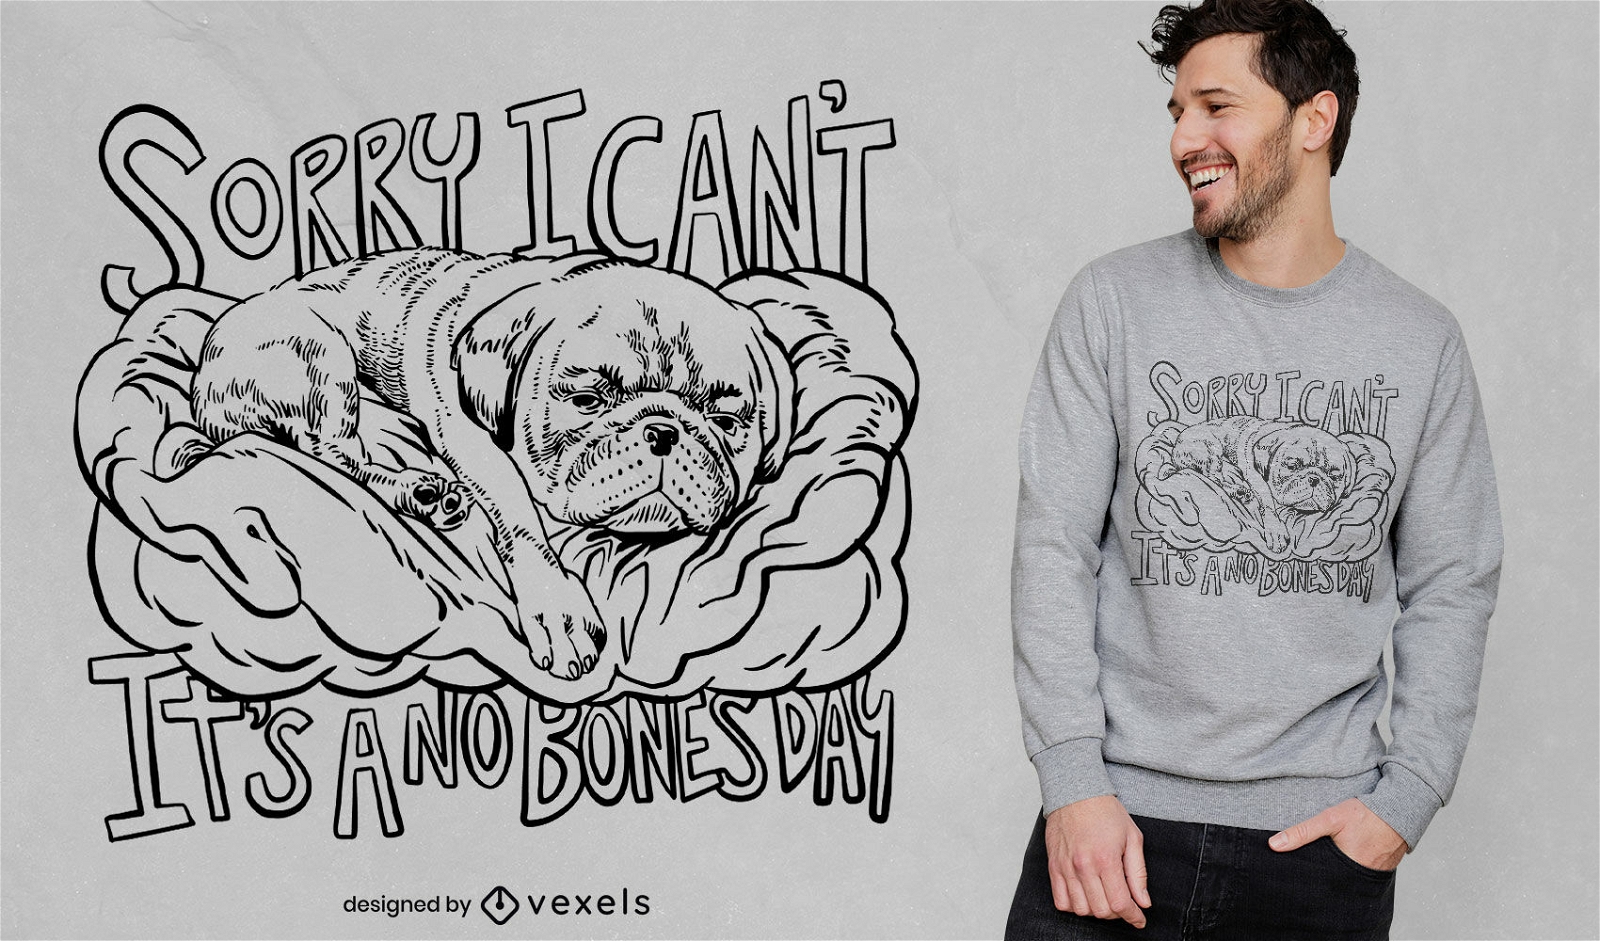 Sorry I can't bulldog t-shirt design